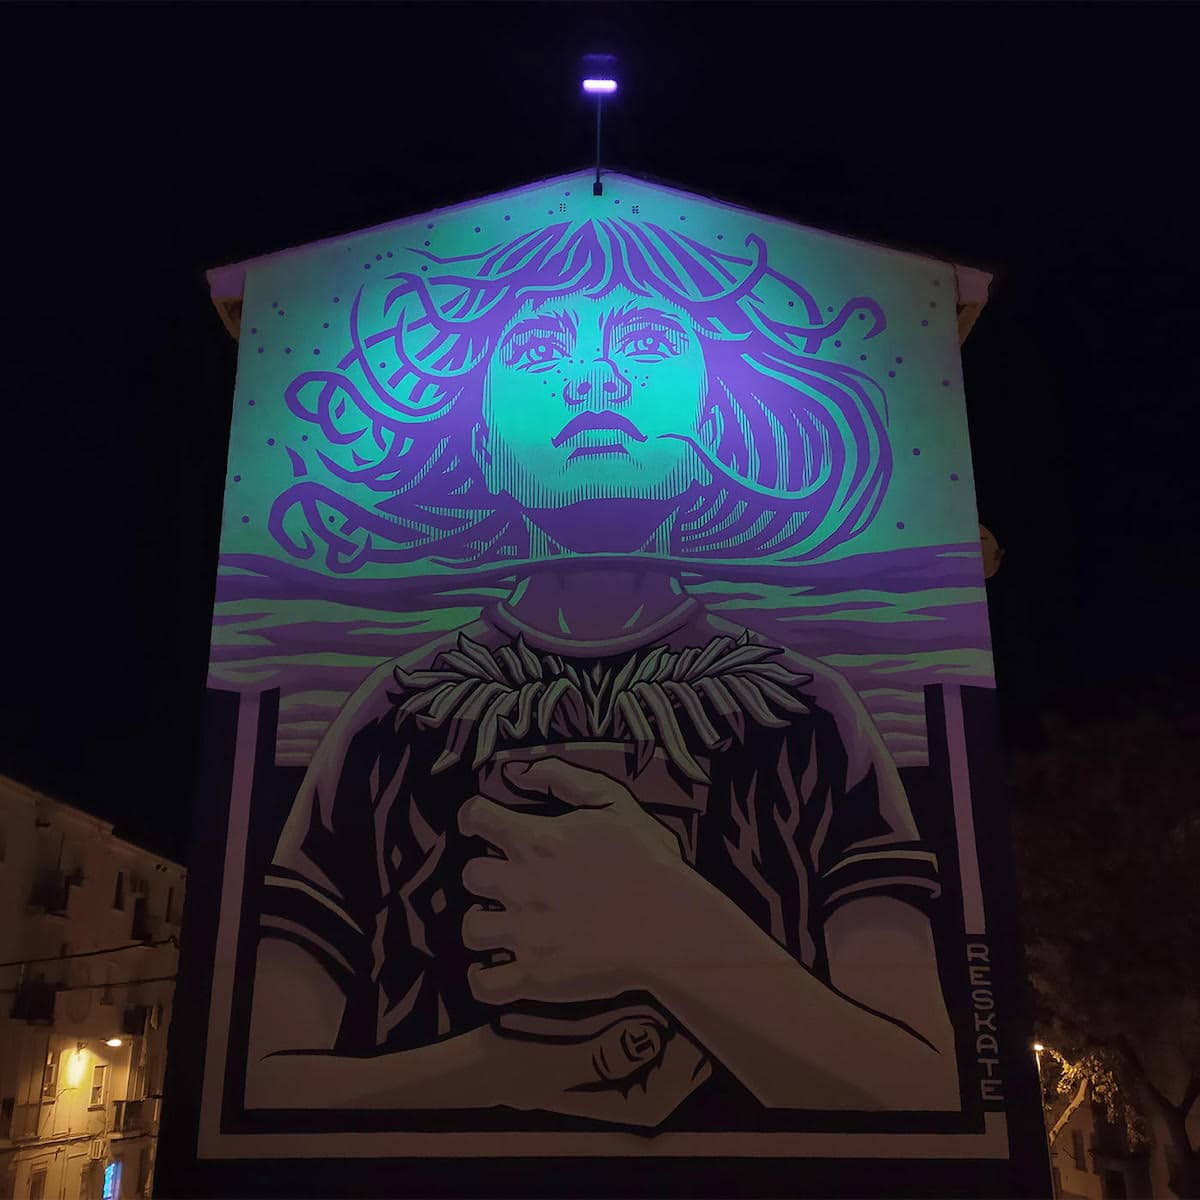 Light Sensitive Mural in Spain by Reskate Studio